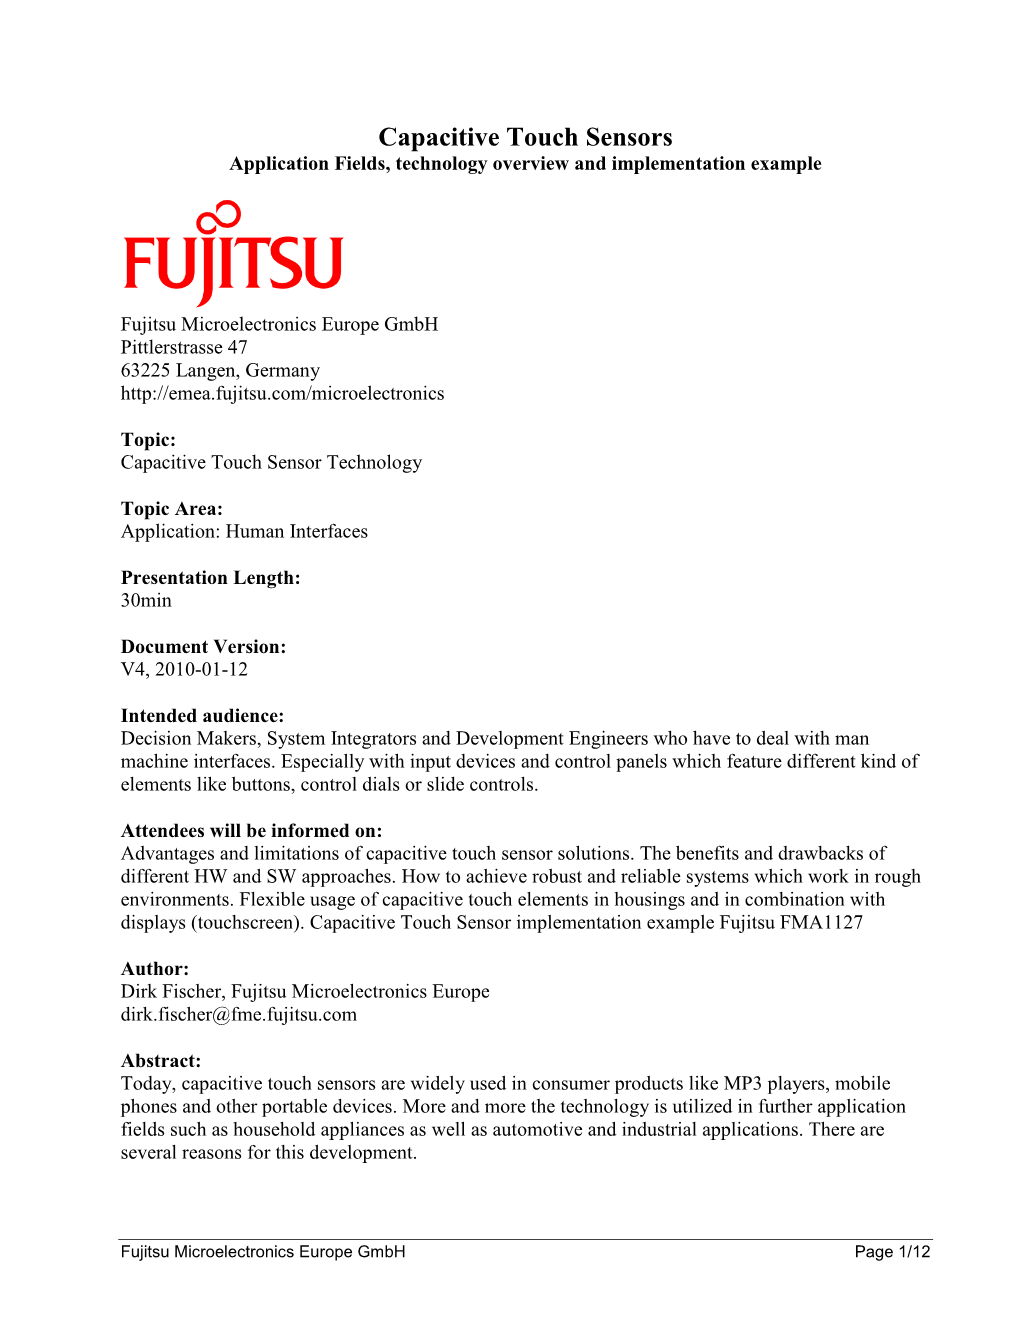 “Capacitive Touch Sensors,” Fujitsu Microelectronics Europe Gmbh, Jan 2021